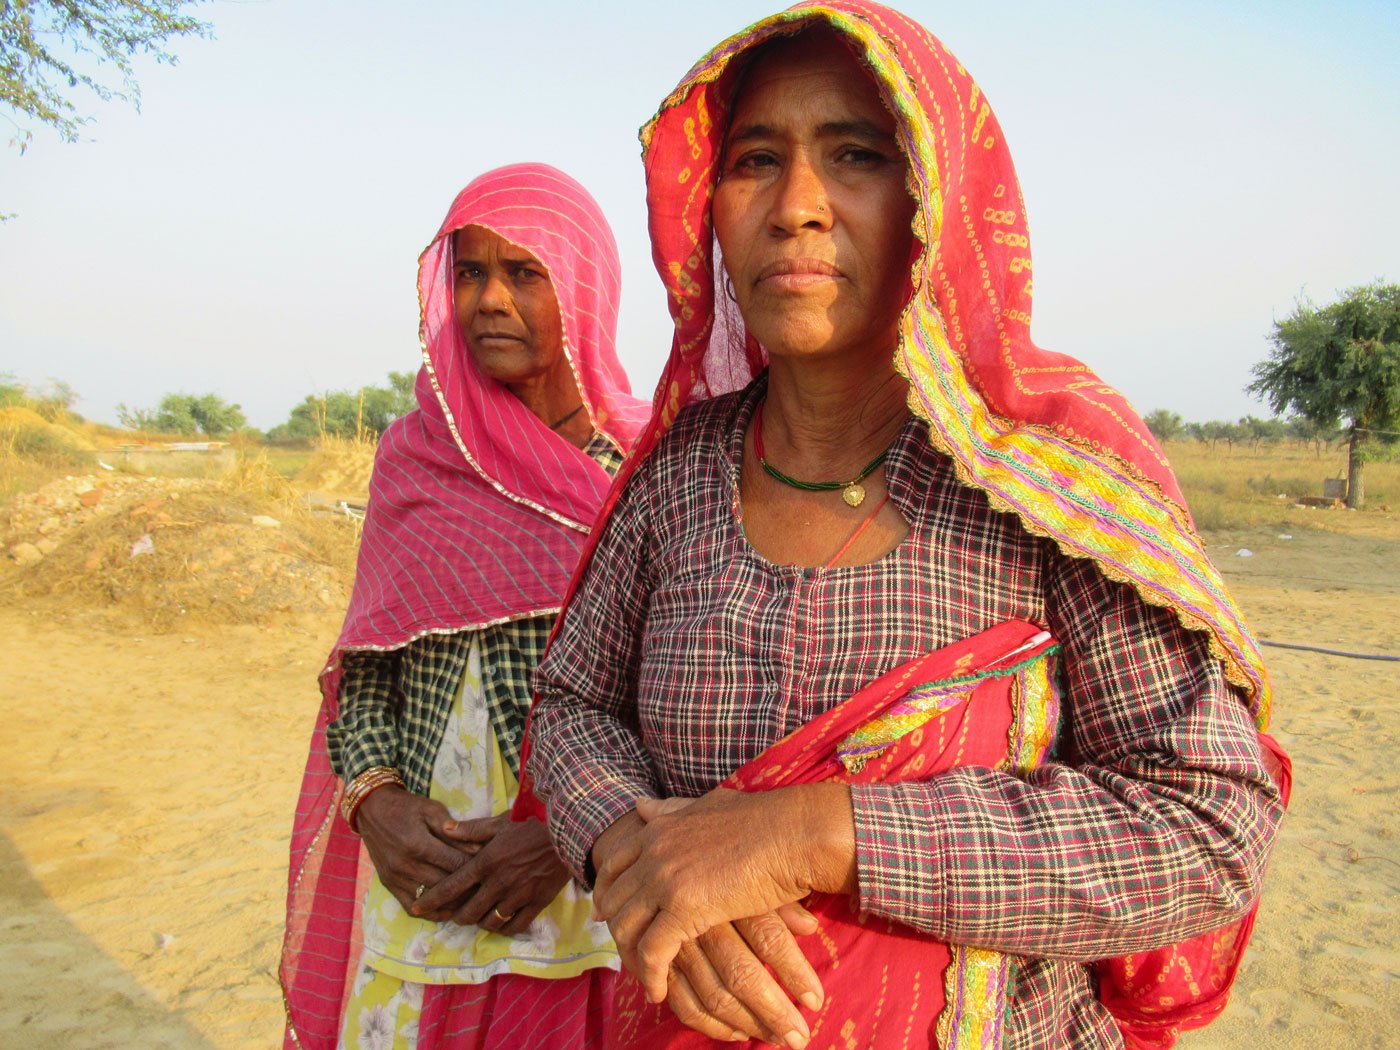 Geeta Devi and Bhagwani Devi of of Sujangarh tehsil, Churu: ' Garmi hee garmi pade aaj kal' ('It’s heat and more heat nowadays')

